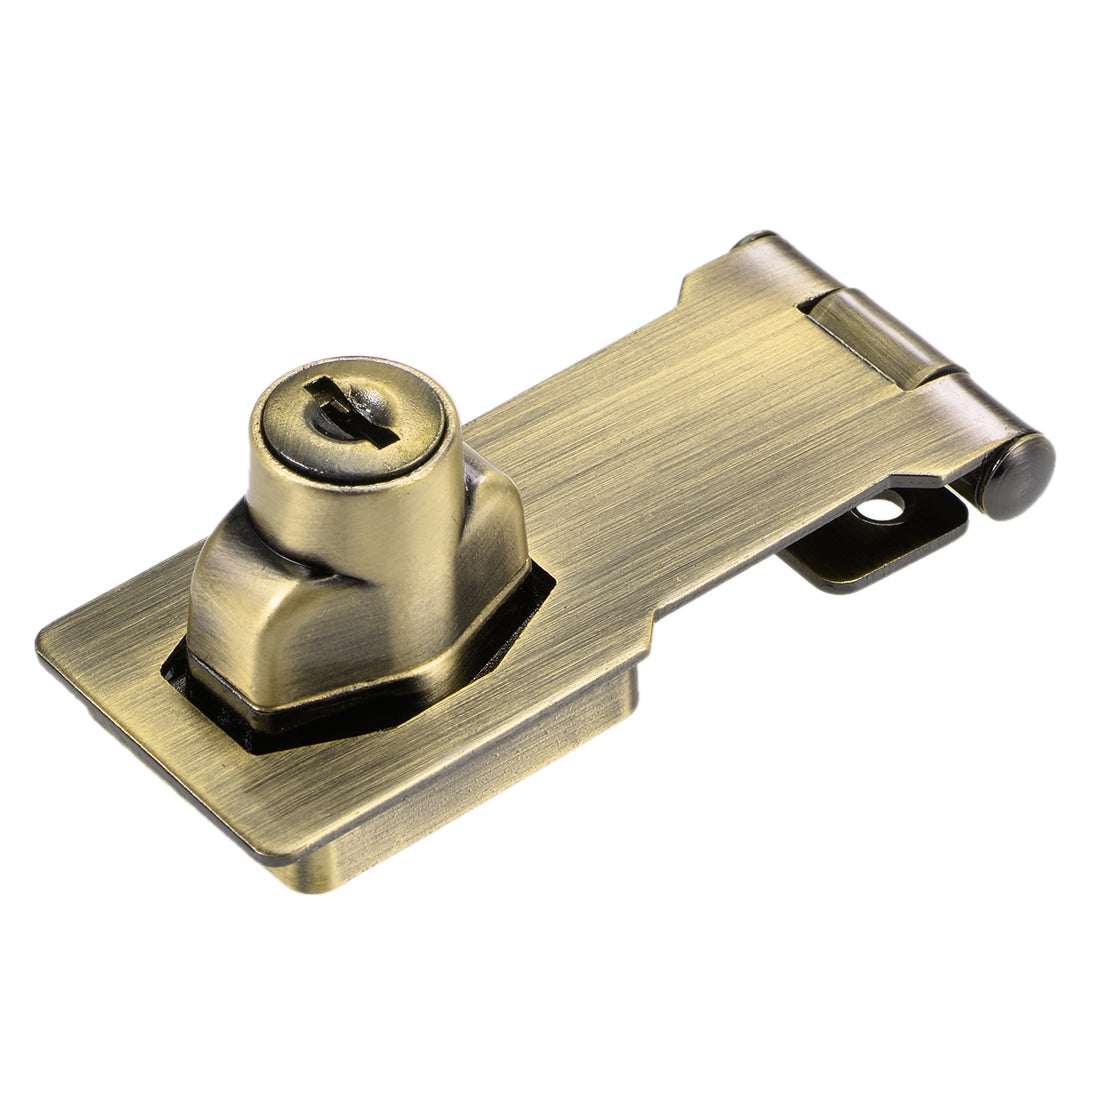 uxcell Uxcell 3-inch Keyed Hasp Locks w Screws for Door Keyed Alike Bronze Tone 2Pcs